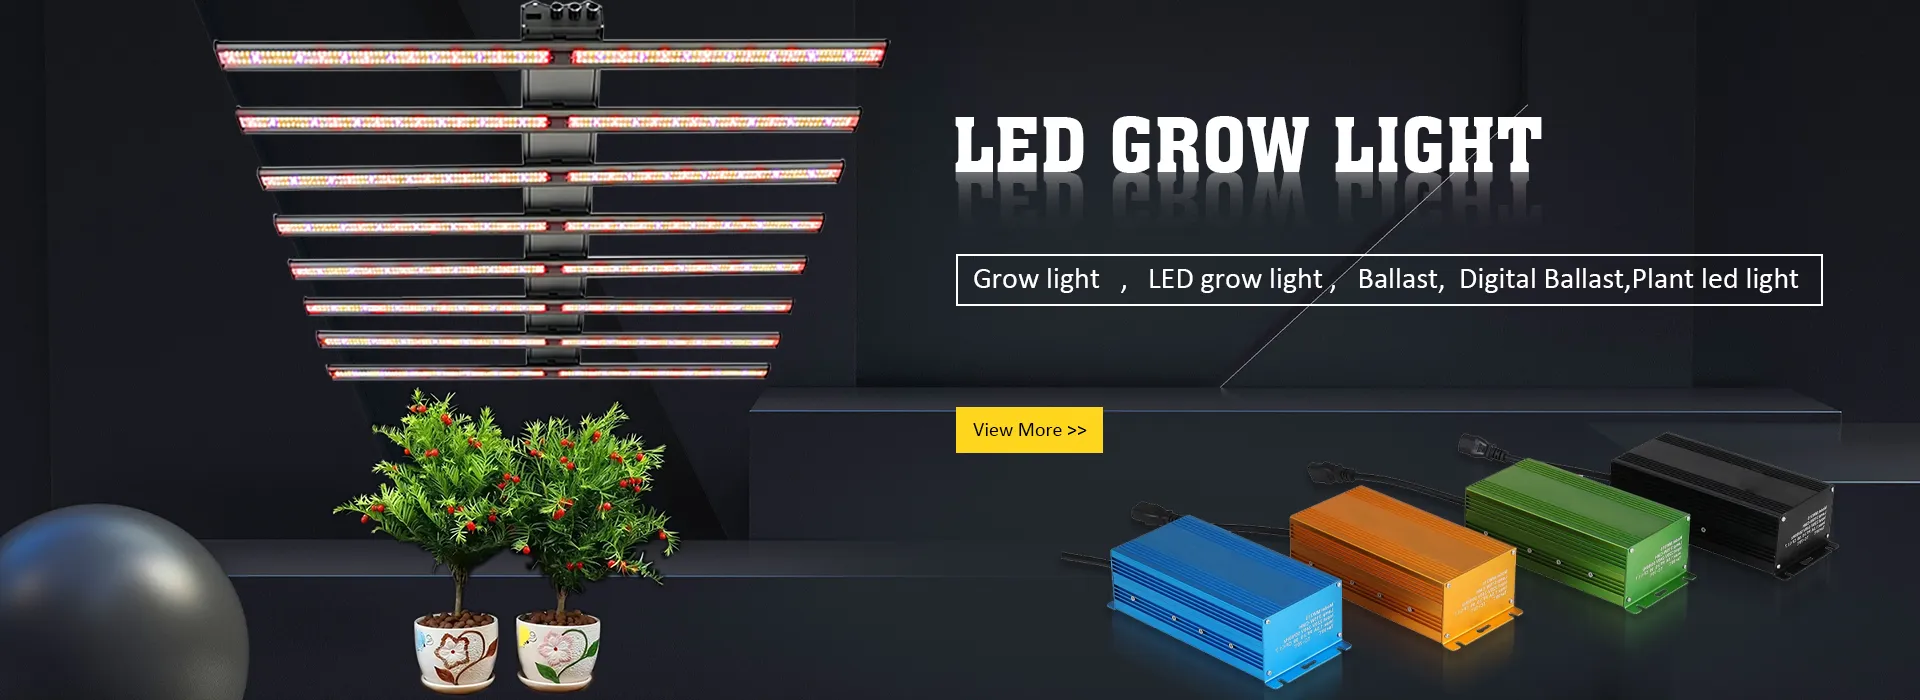 LED GROW LIGHT